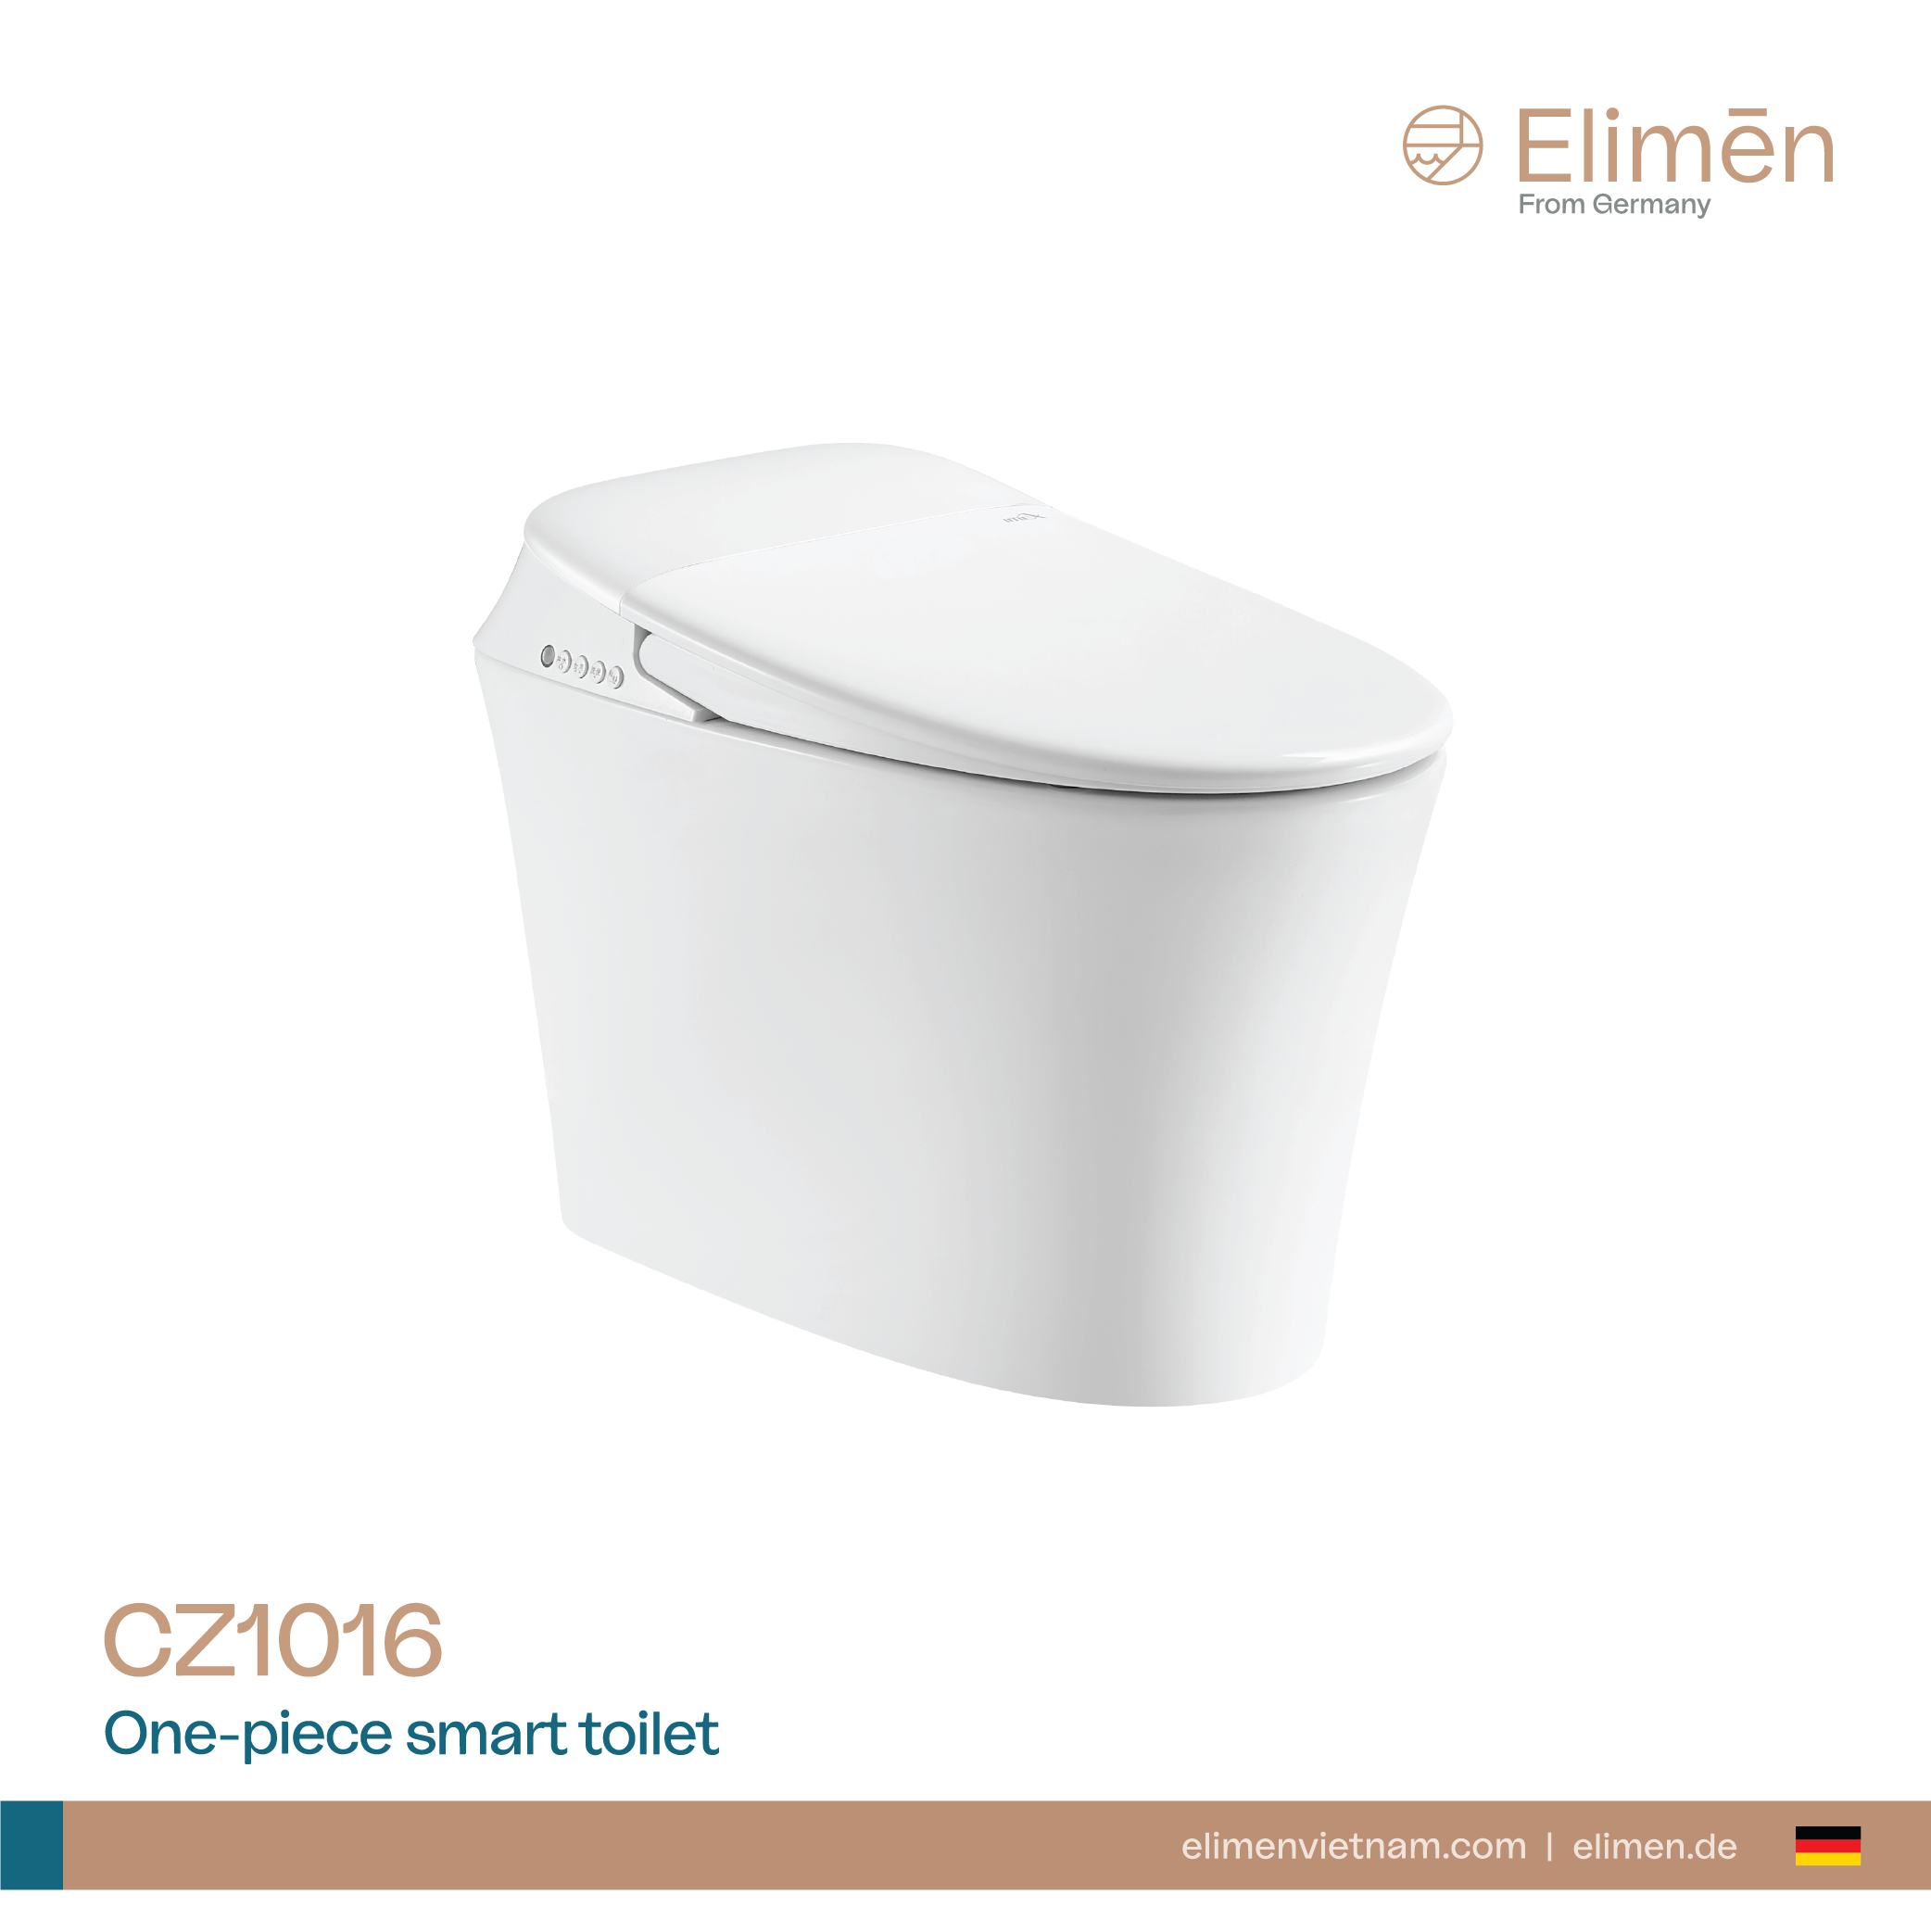 Elimen intelligent toilet - Code CZ1016-305